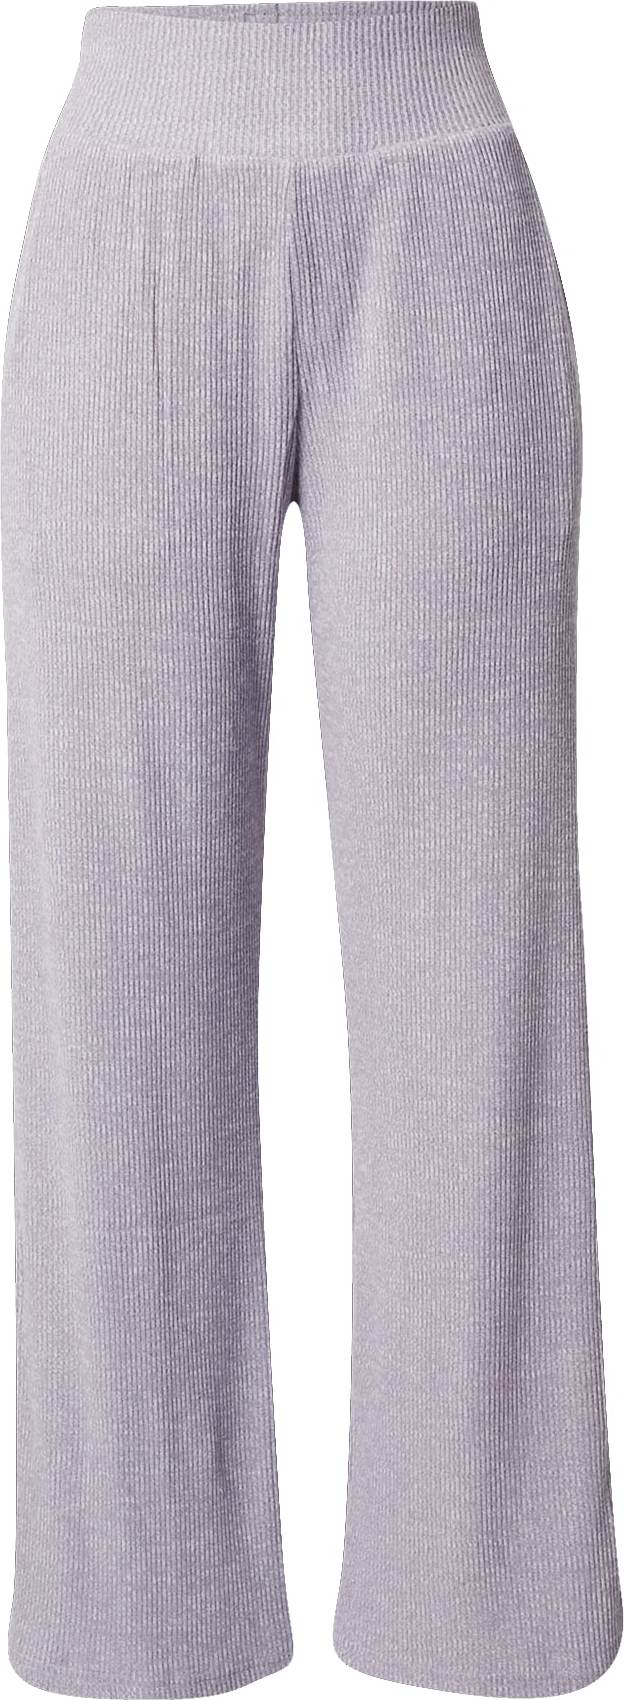 TRIUMPH Kalhoty šedý melír